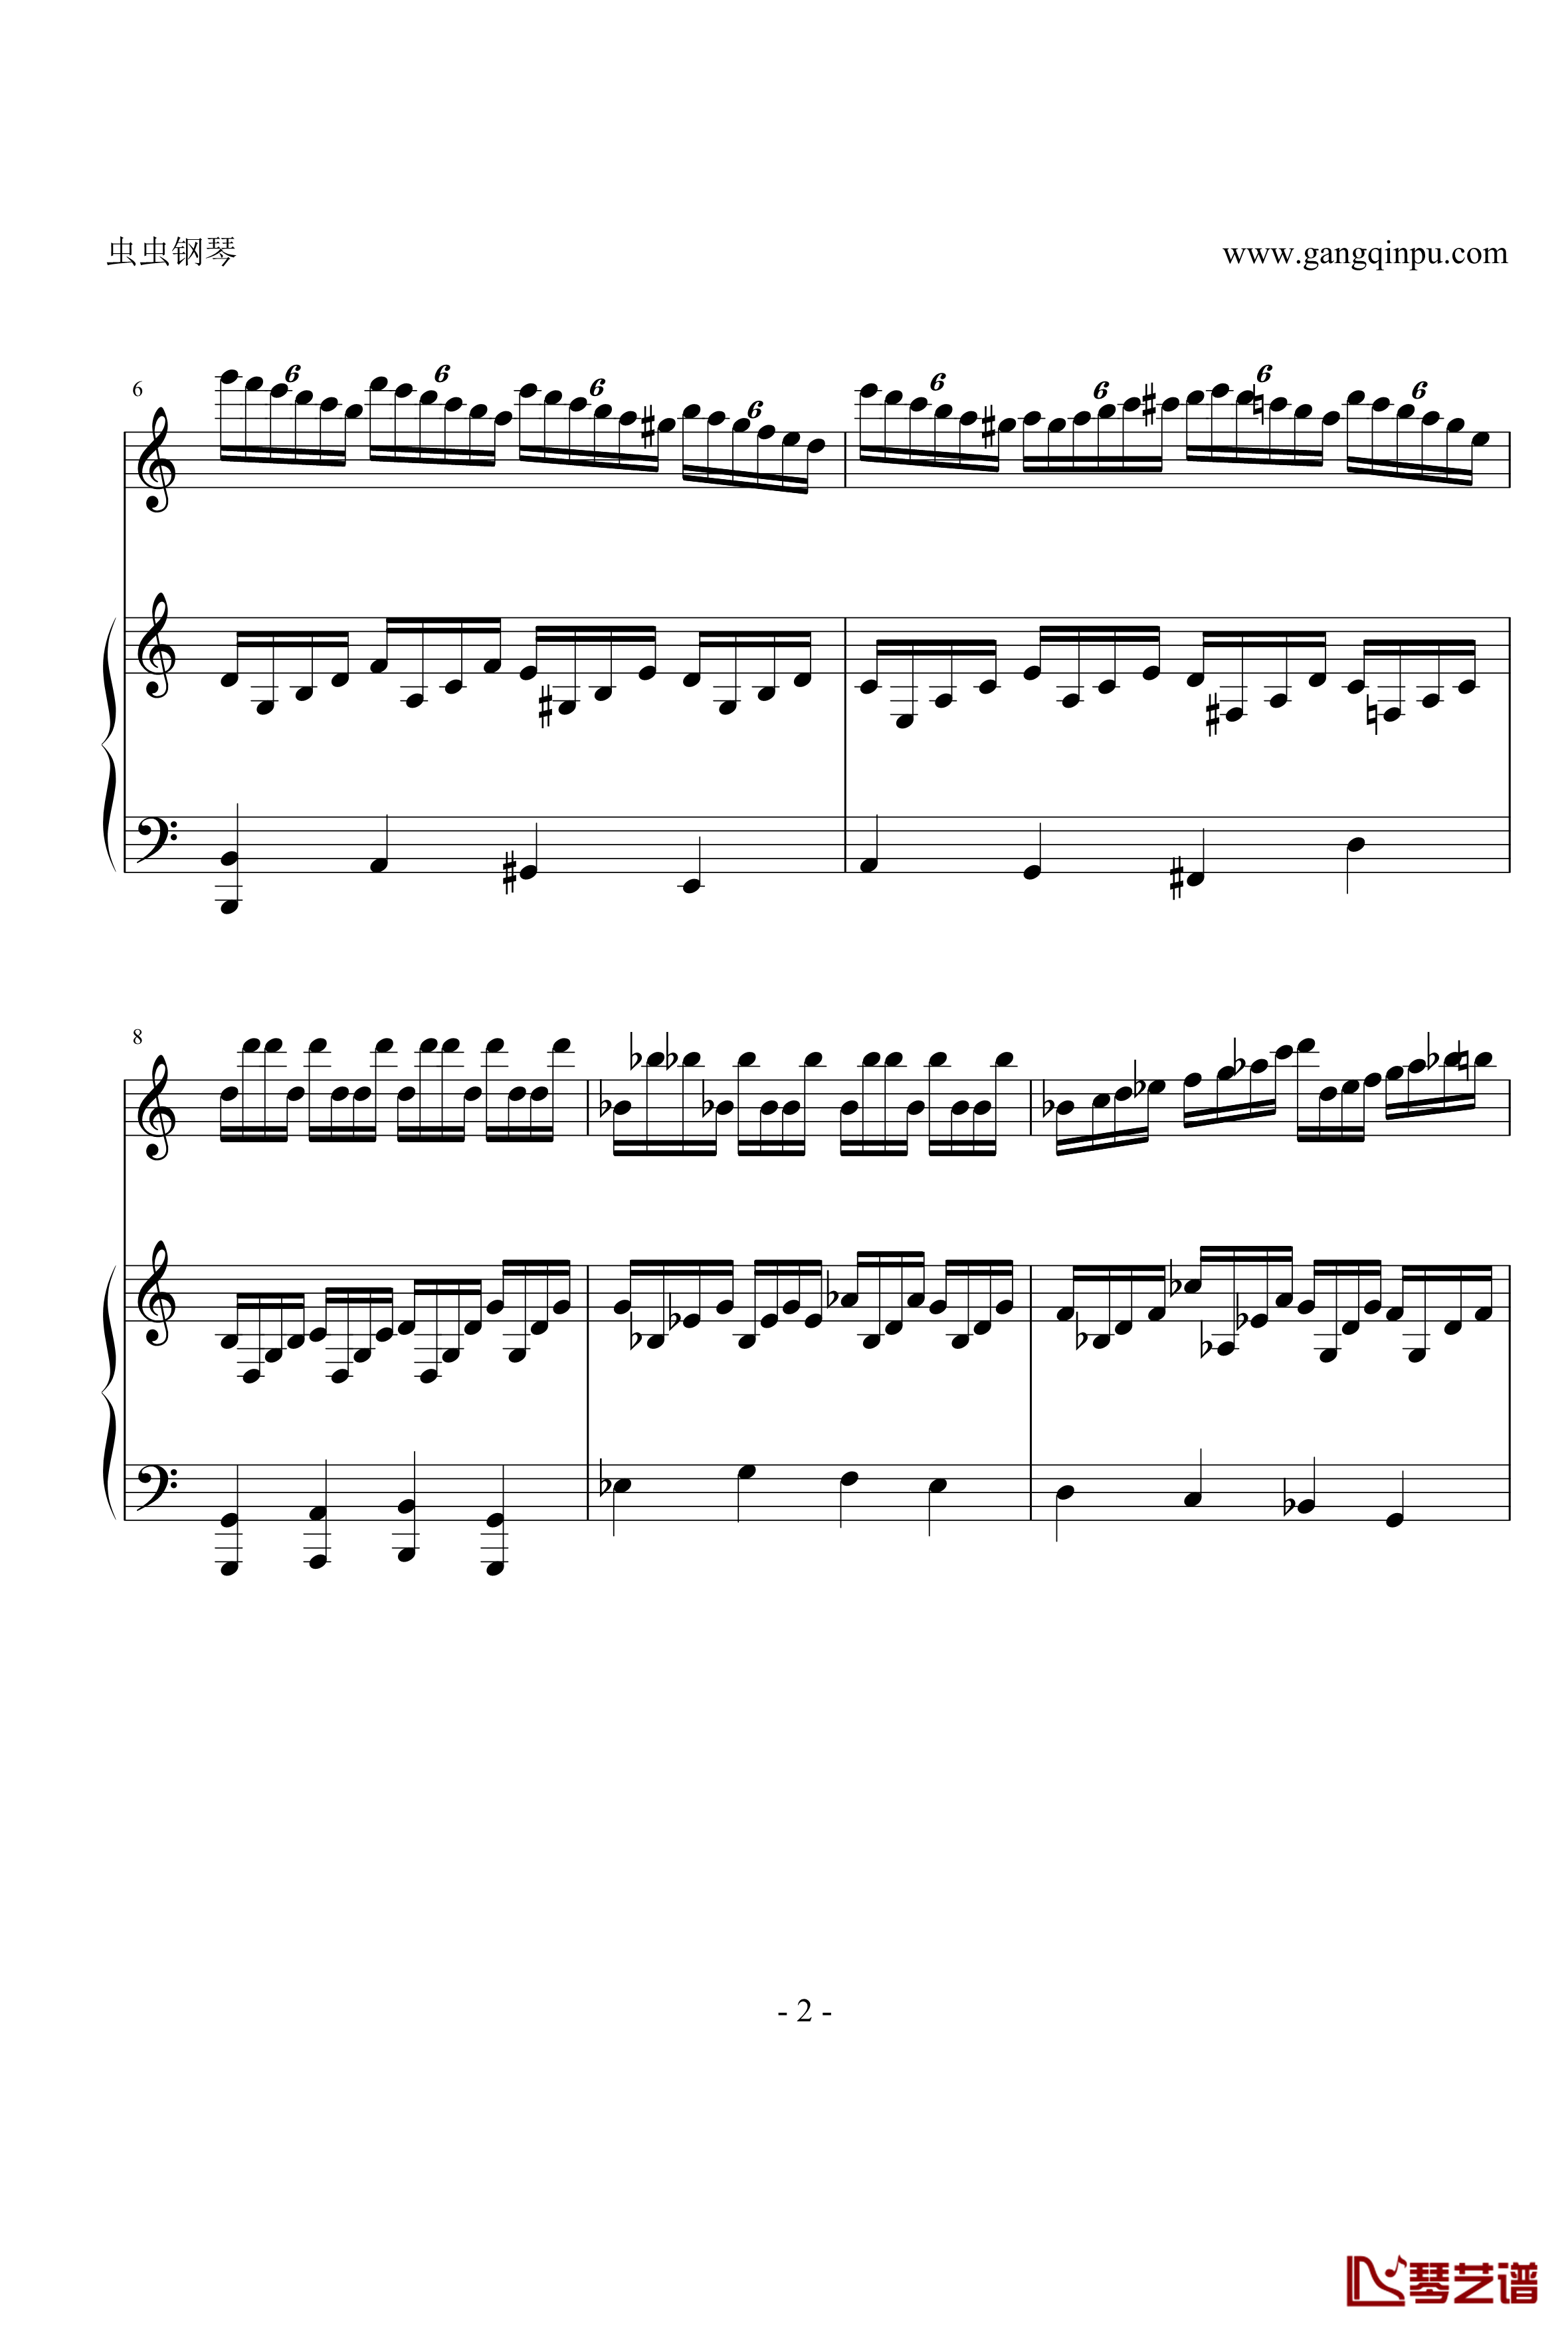 Study for Three Hands钢琴谱-海上钢琴师2